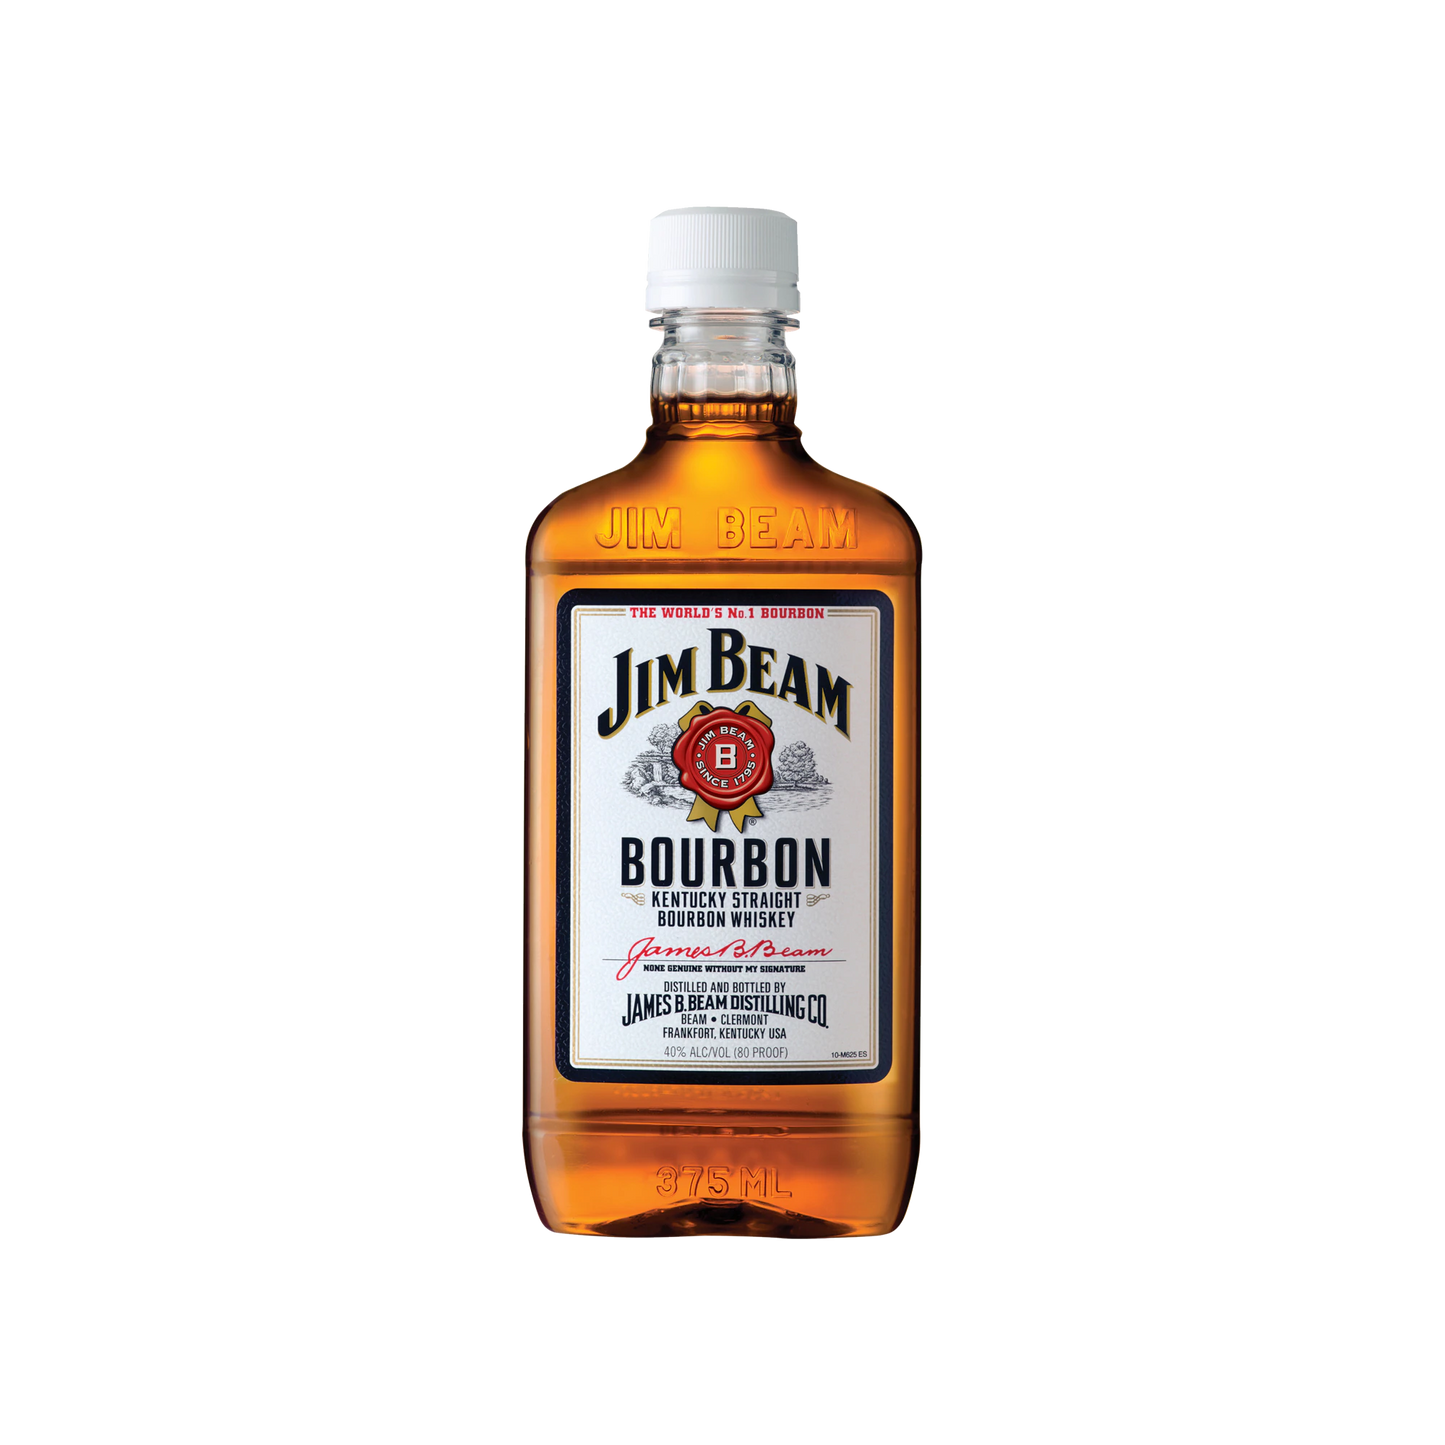 Jim Beam White Label Kentucky Straight Bourbon Whiskey 375ml